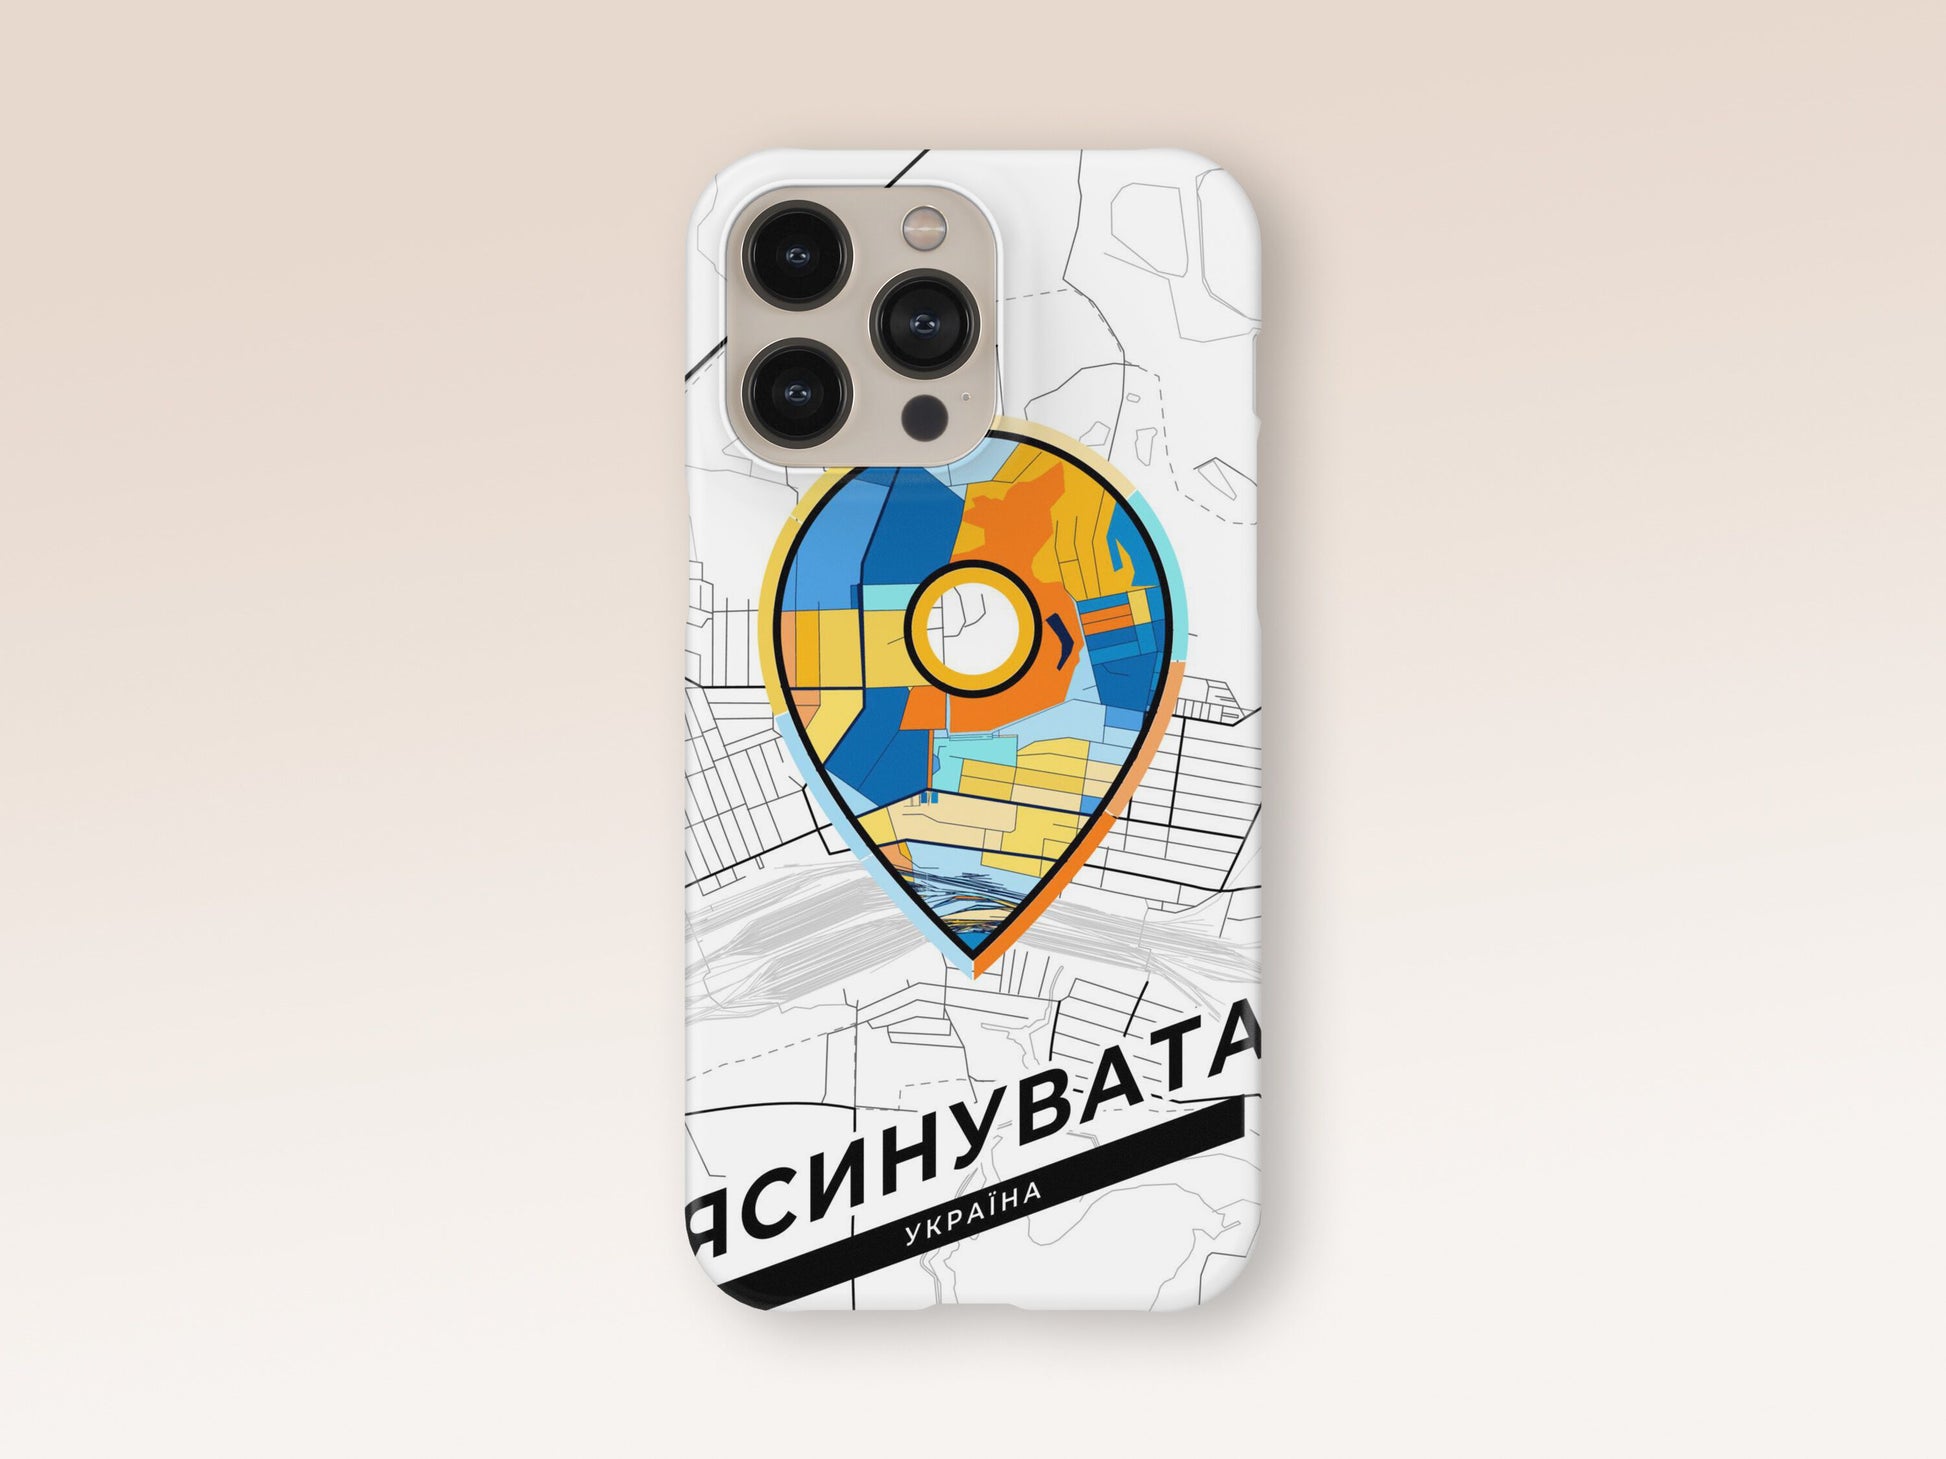 Yasynuvata Ukraine slim phone case with colorful icon 1